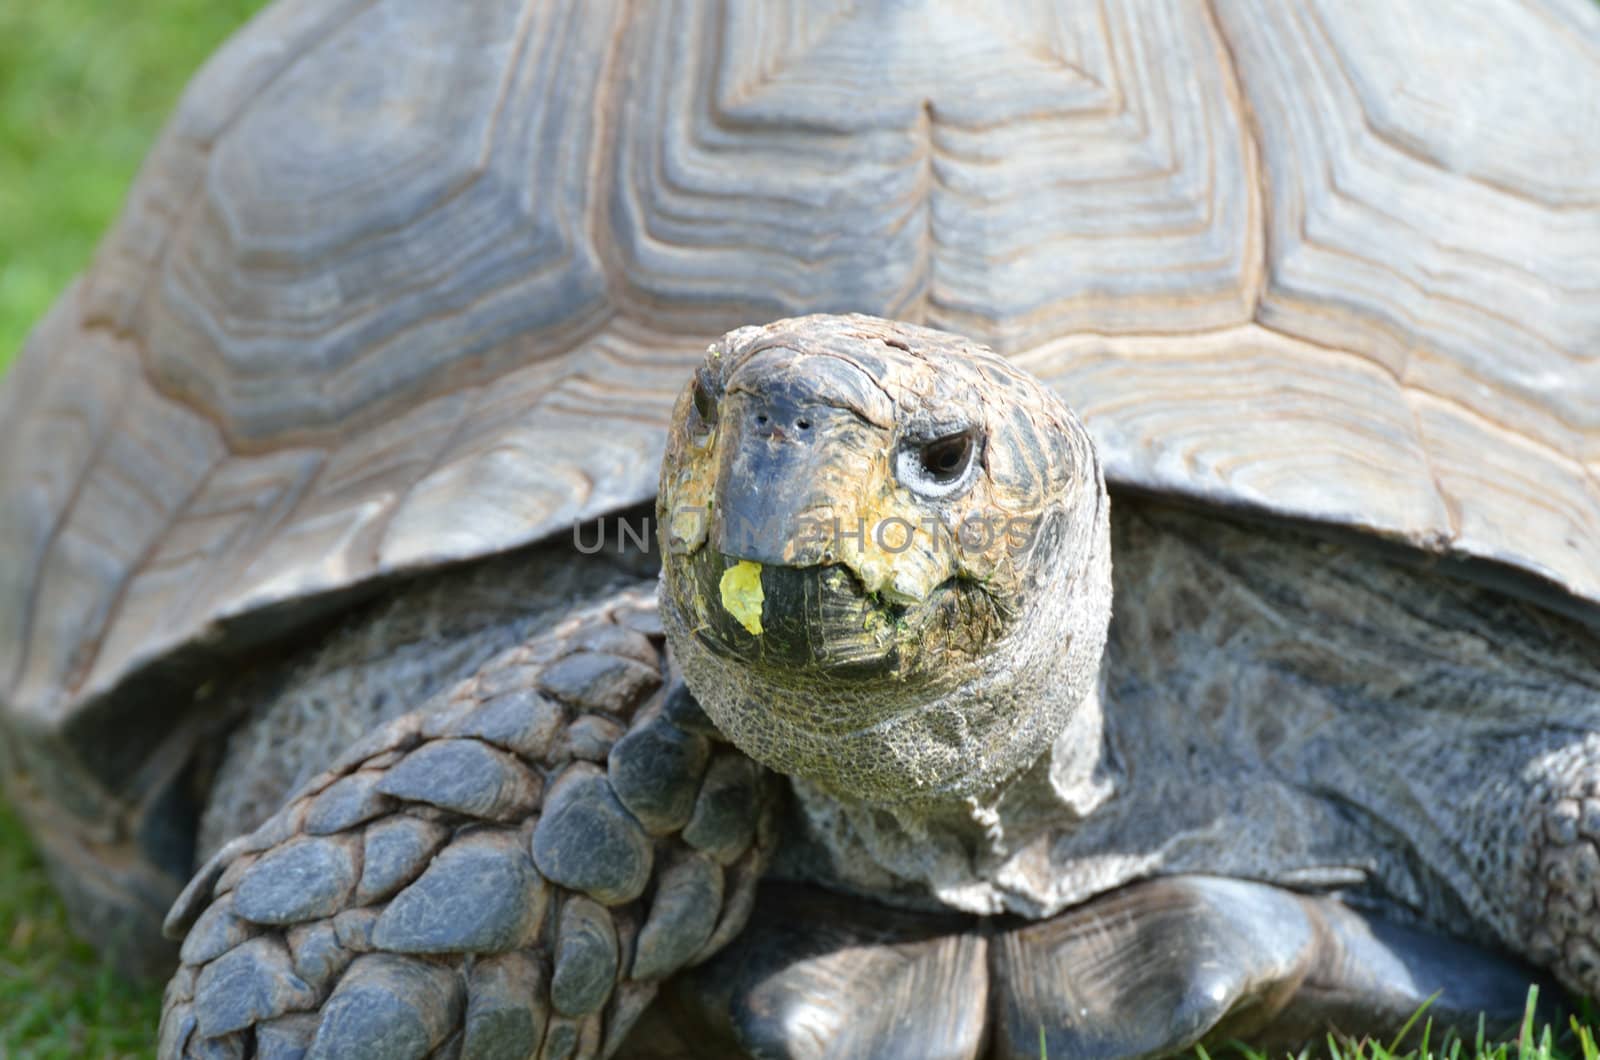 Tortoise Head in close up